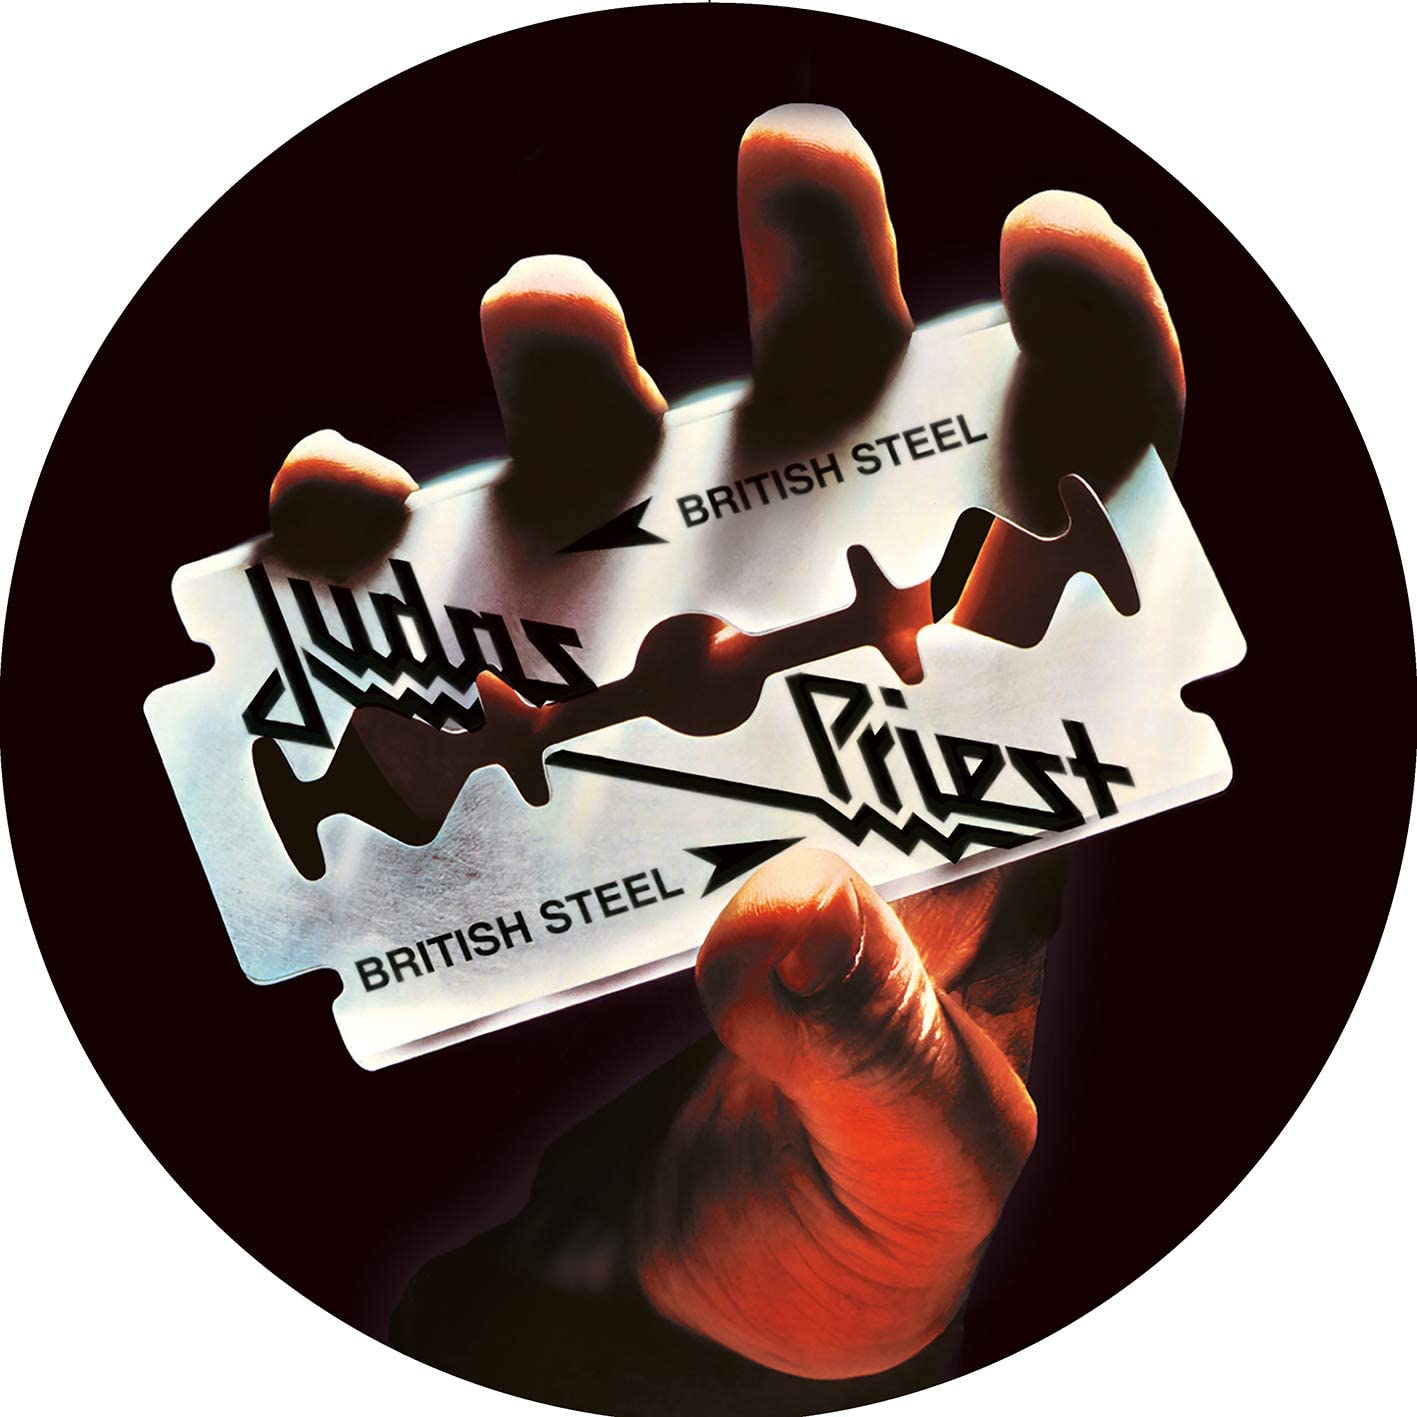 Judas Priest "British Steel" Picture Disc Vinyl